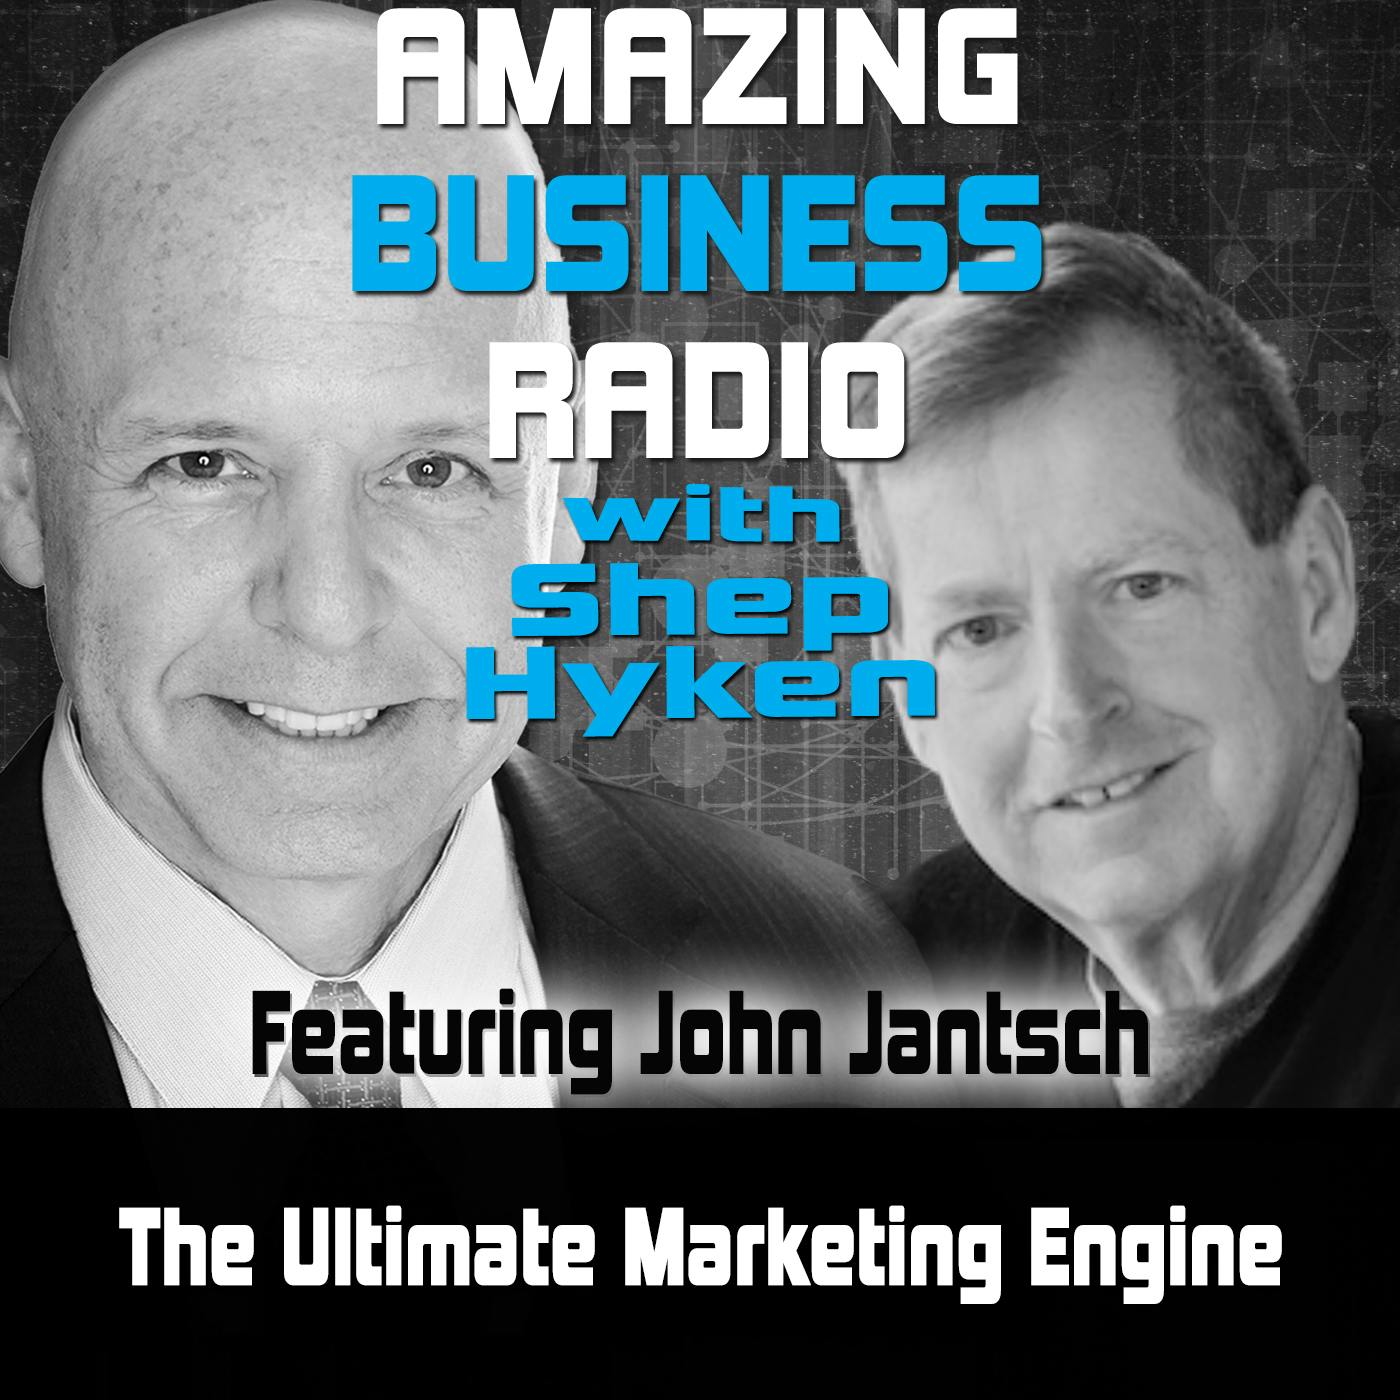 The Ultimate Marketing Engine Featuring John Jantsch